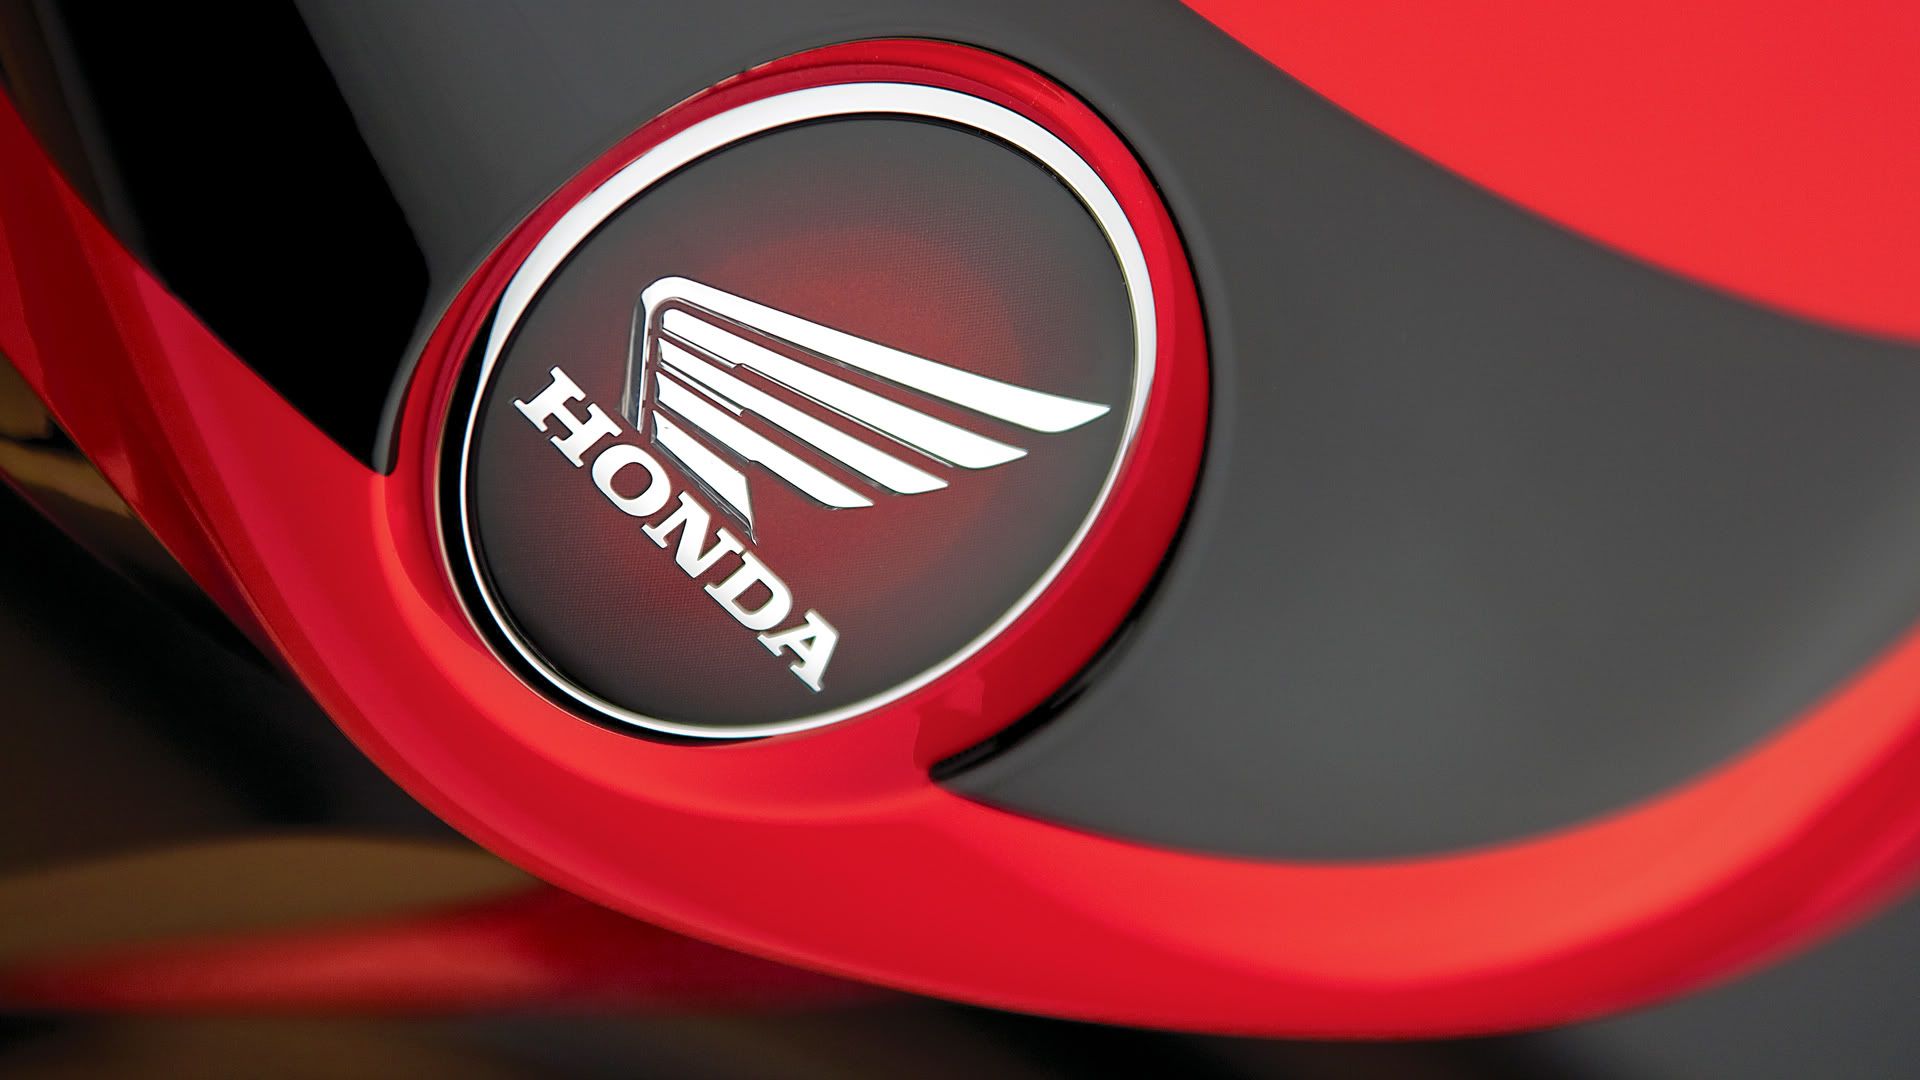 2017 Honda Civic - Honda Motos Wallpaper Hd , HD Wallpaper & Backgrounds